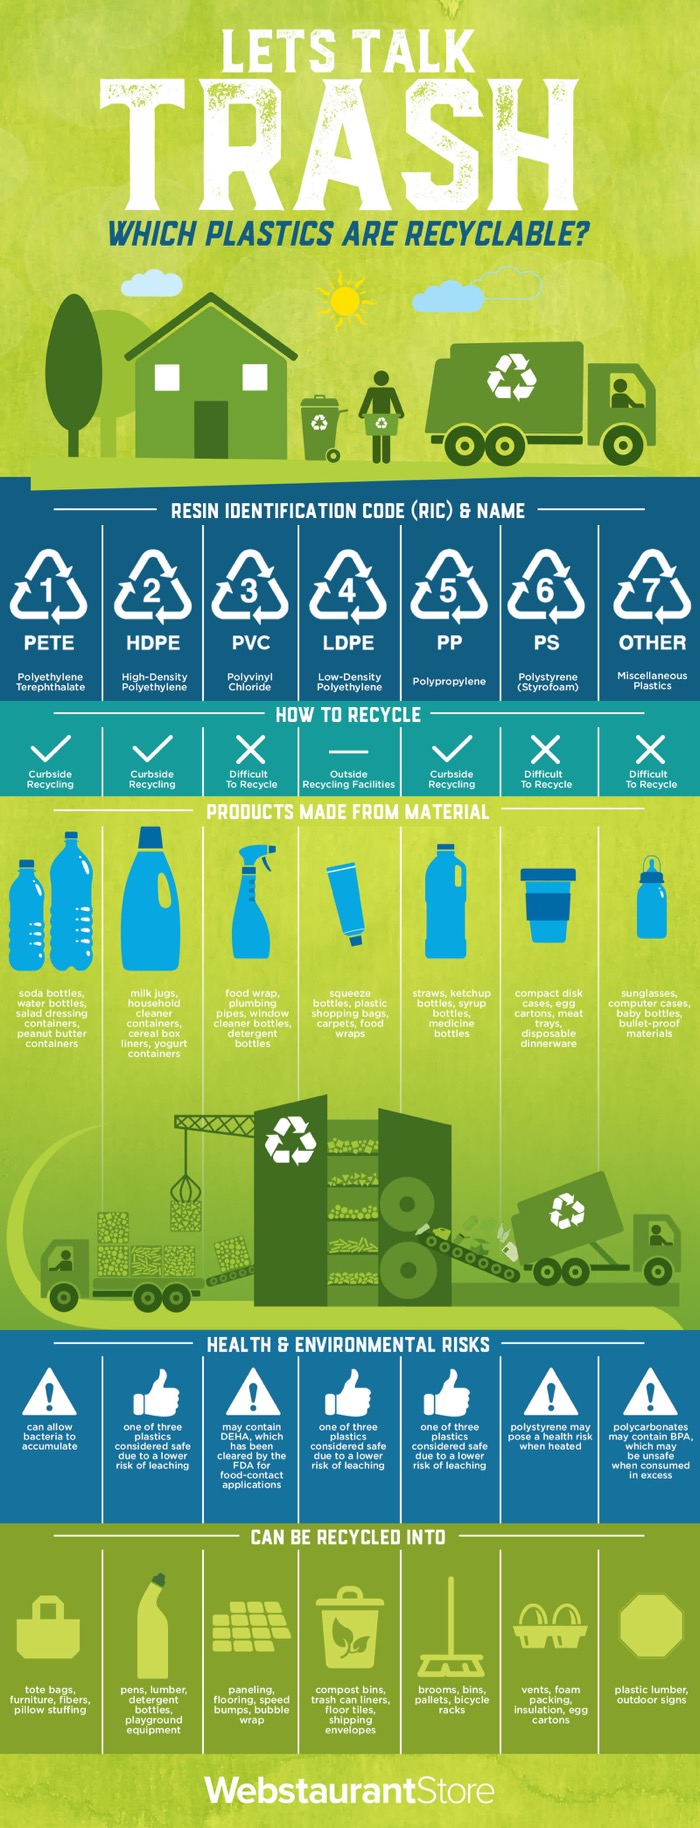 Fibrex Group - Let's Talk Trash Infographic